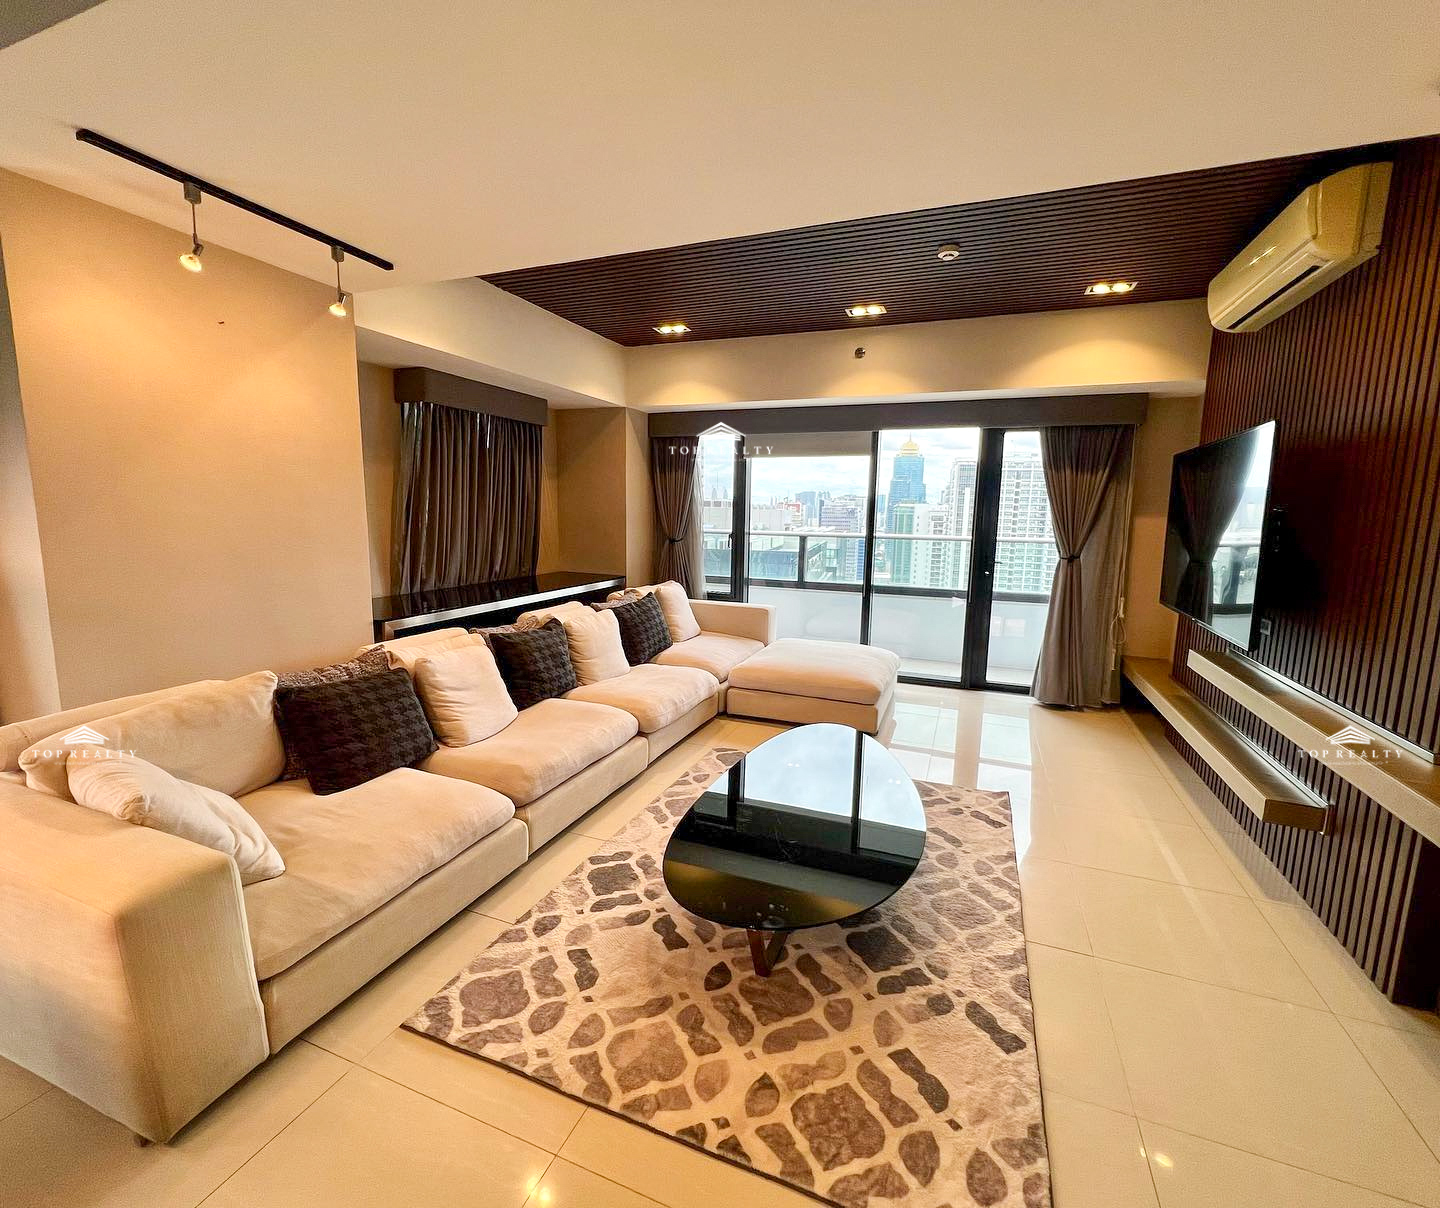 For Sale: 2 Bedroom Condominium in Arya Residences, BGC, Taguig City